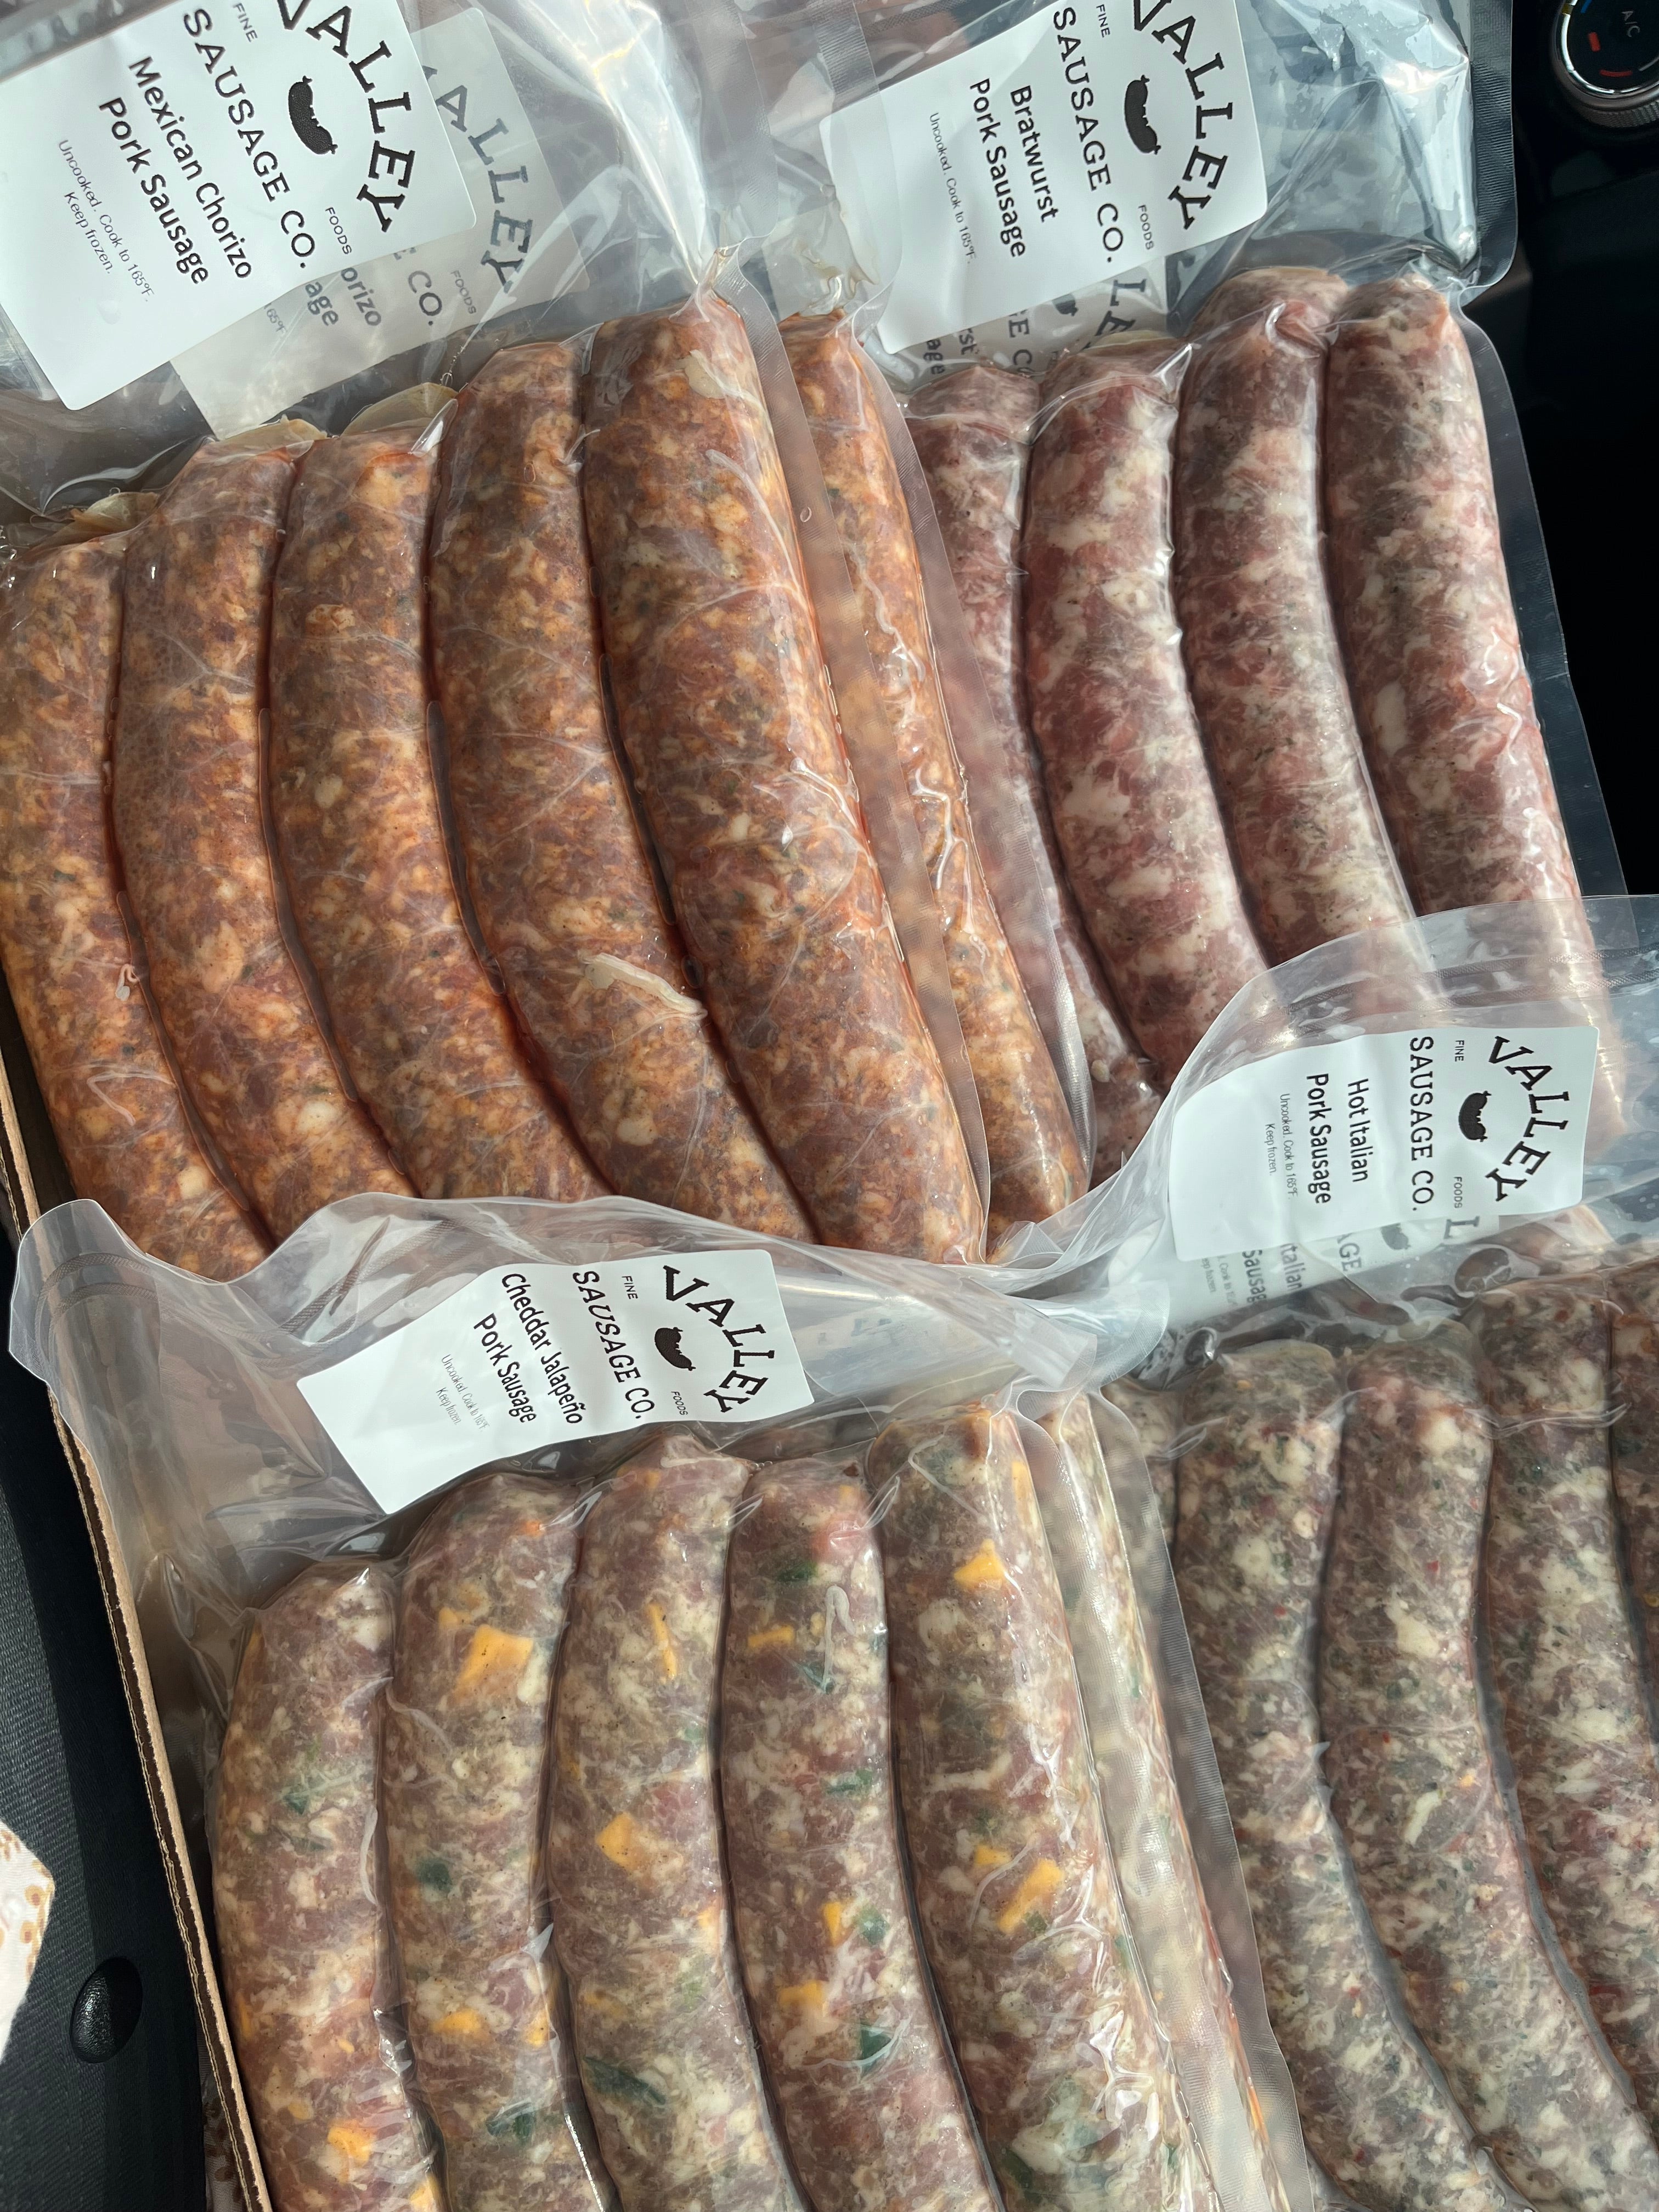 Large 4-month sausage subscription pre-order